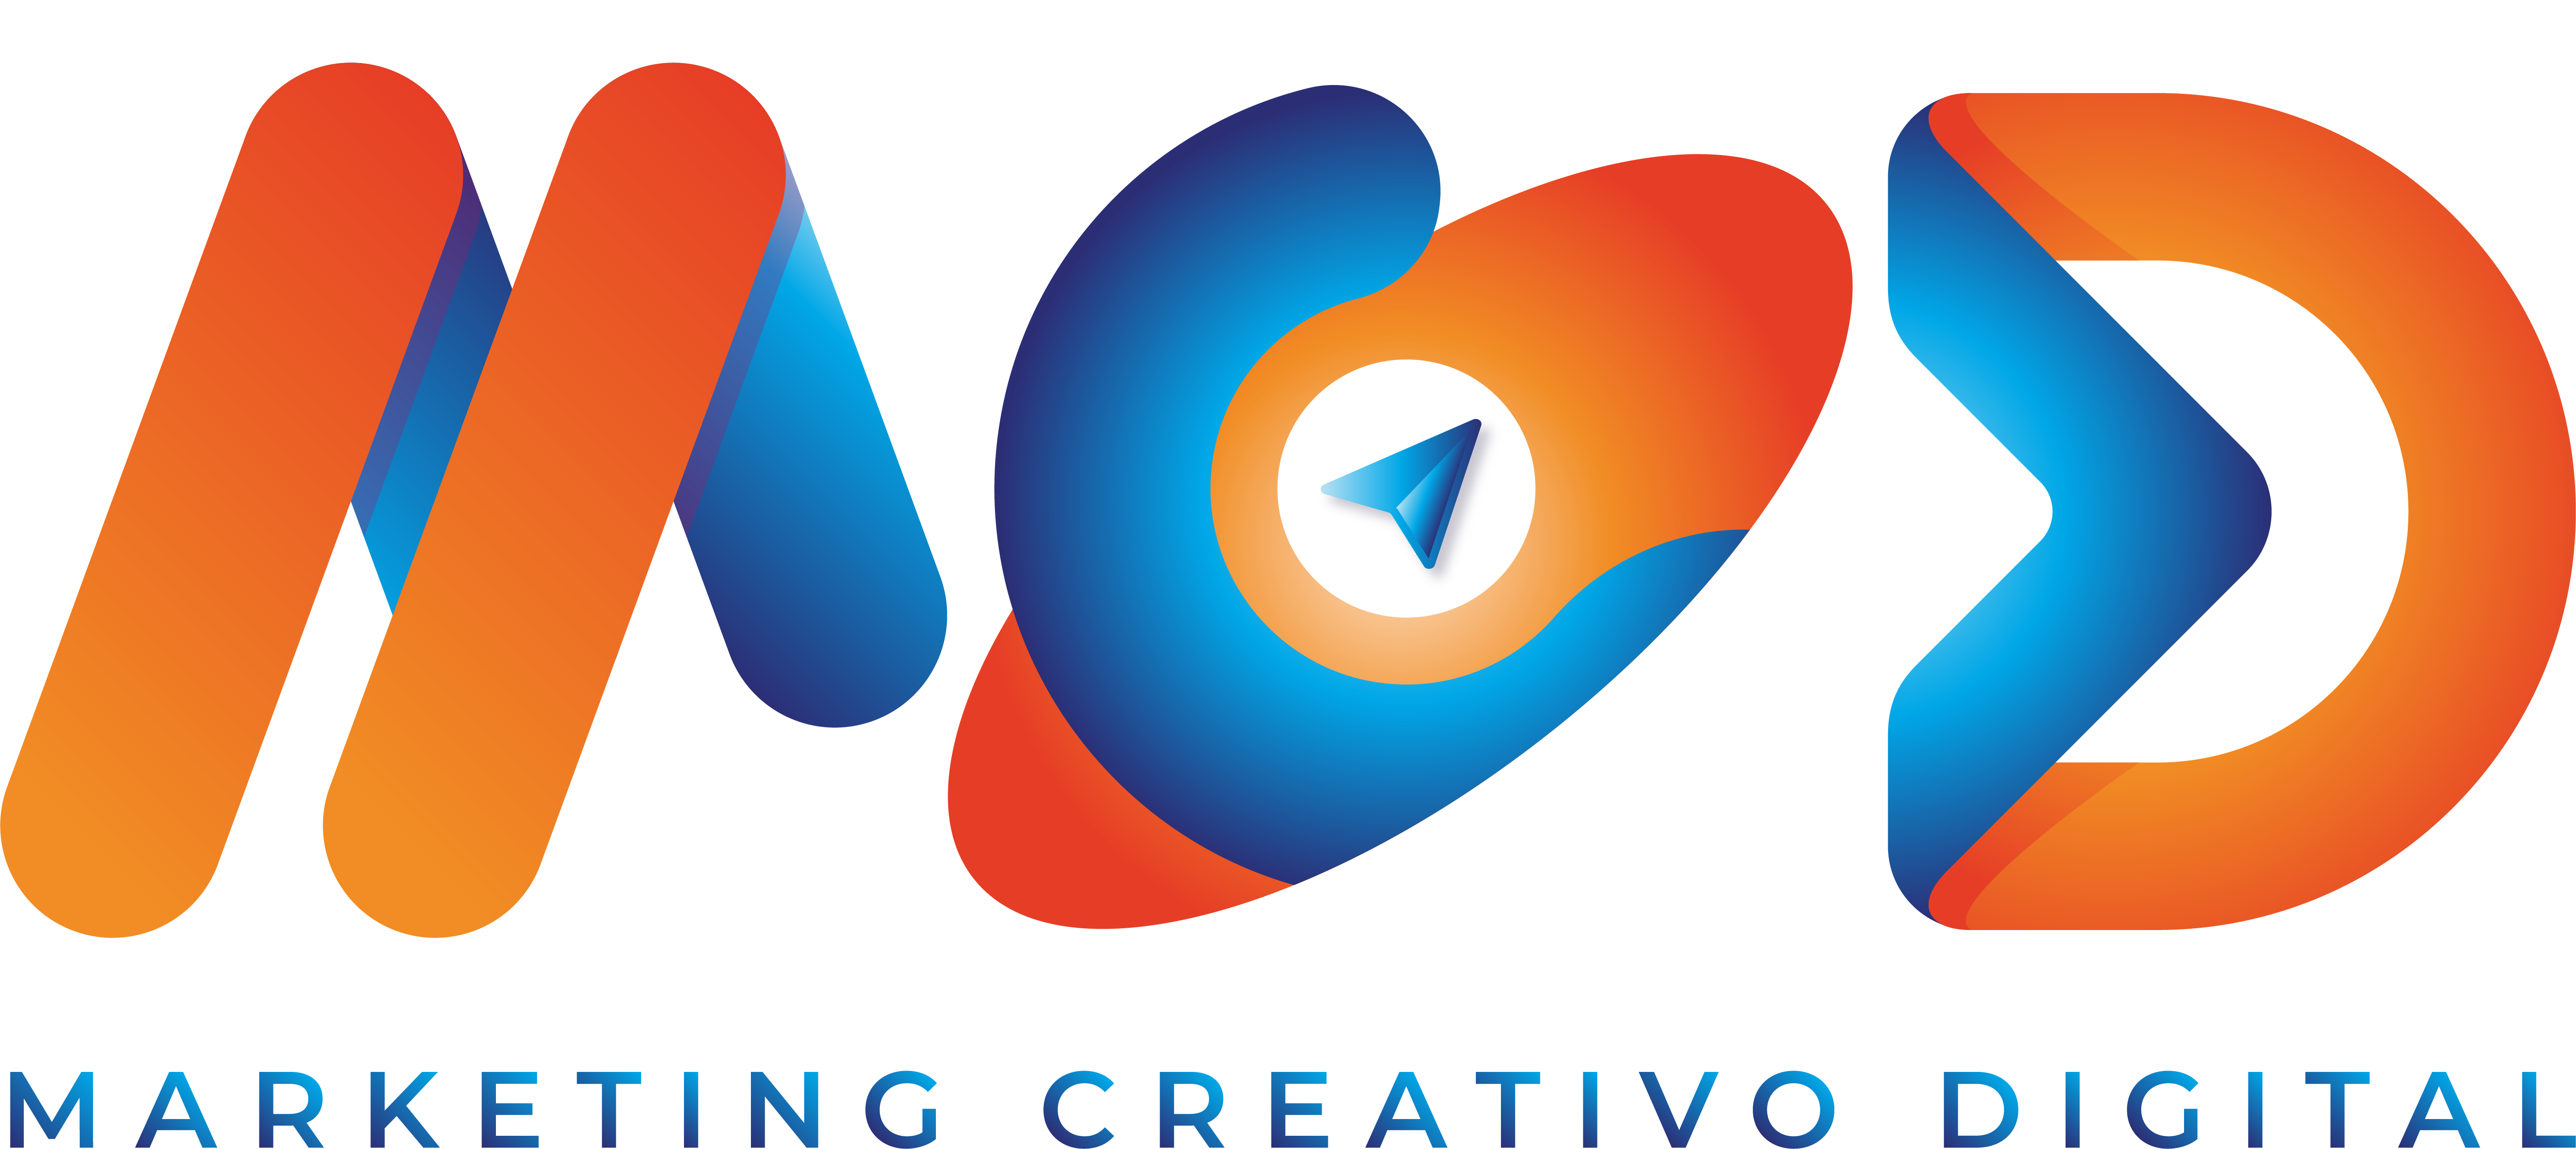 marketing creativo digital logo